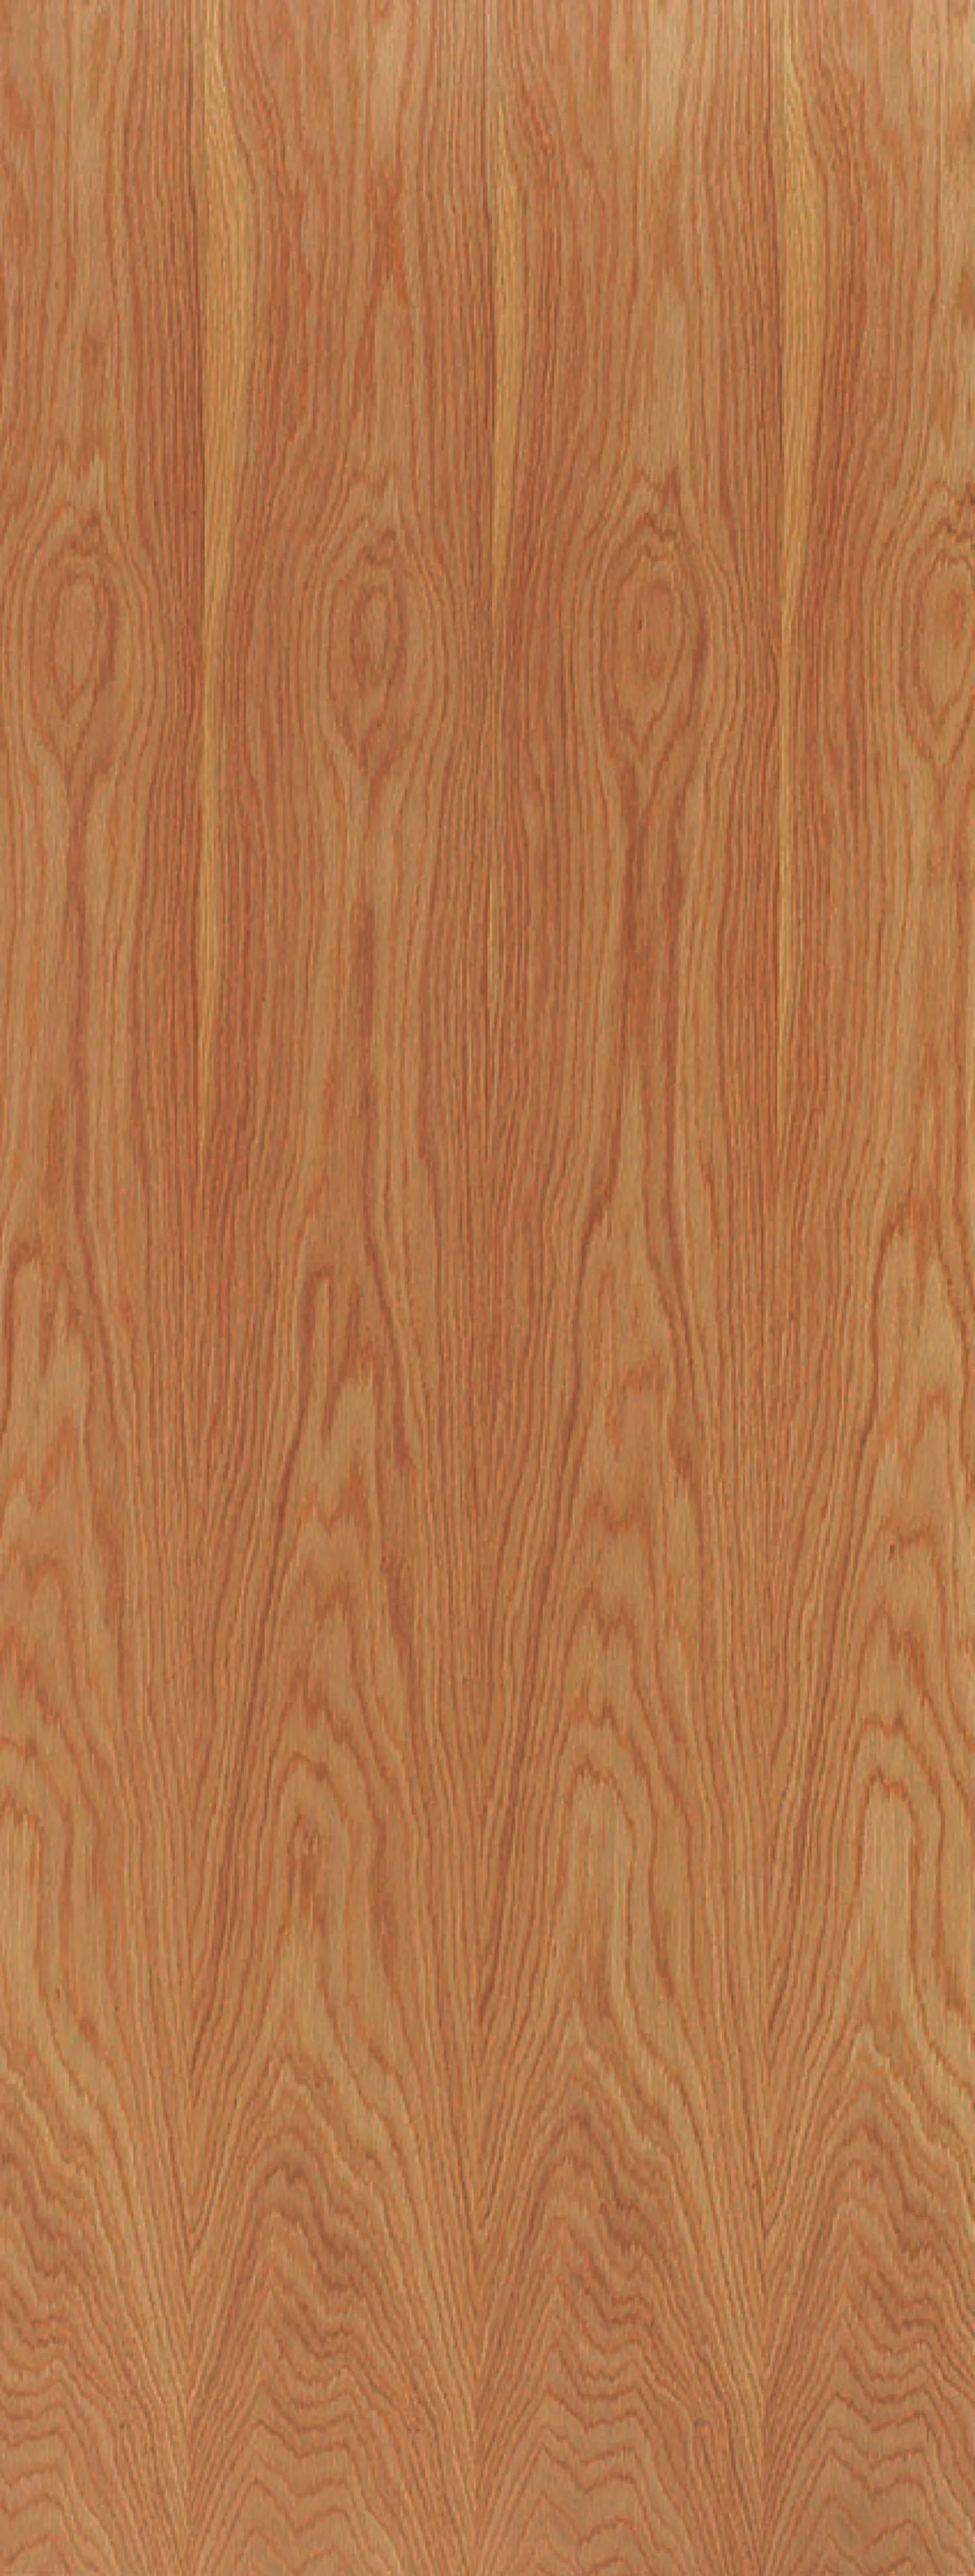 LPD Unlipped External Door Blank 2440 x 1220 (48") Unfinished Hardwood